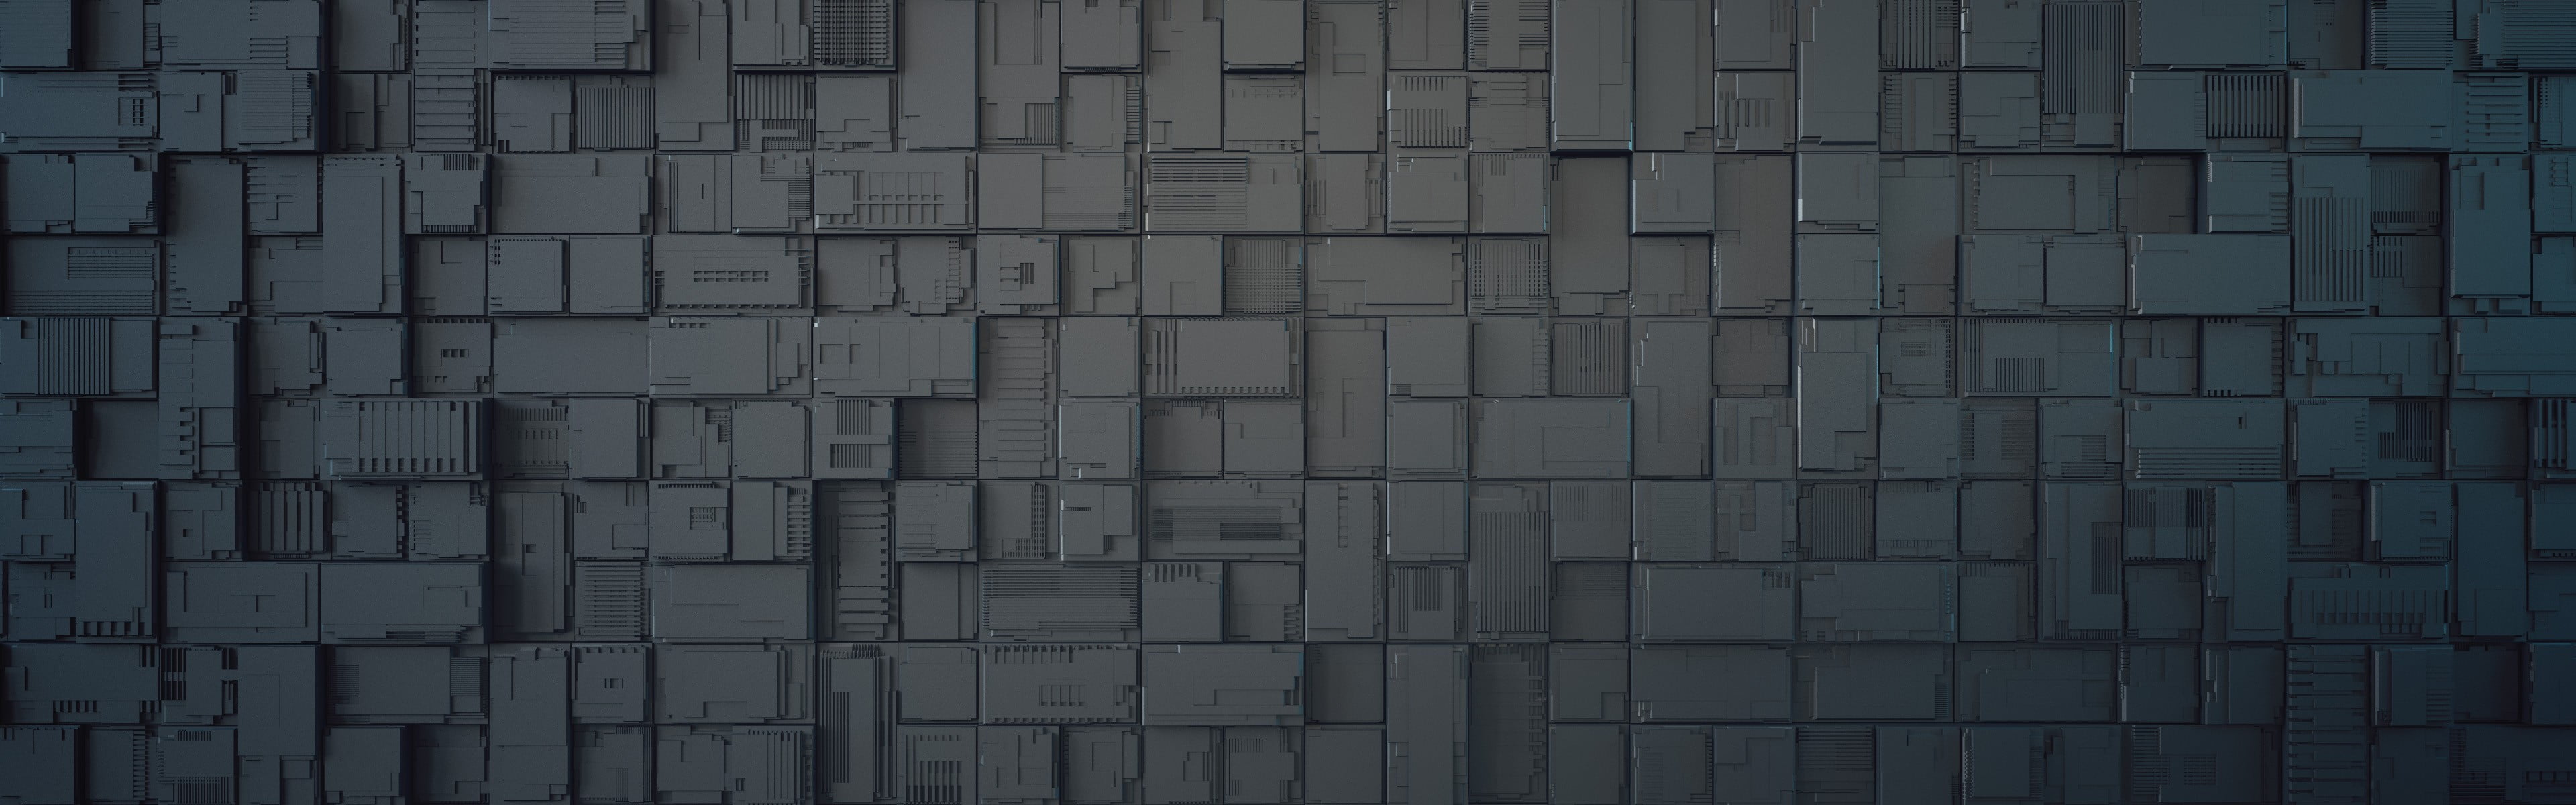 gray brick wall, texture, digital art, pattern, artwork, abstract